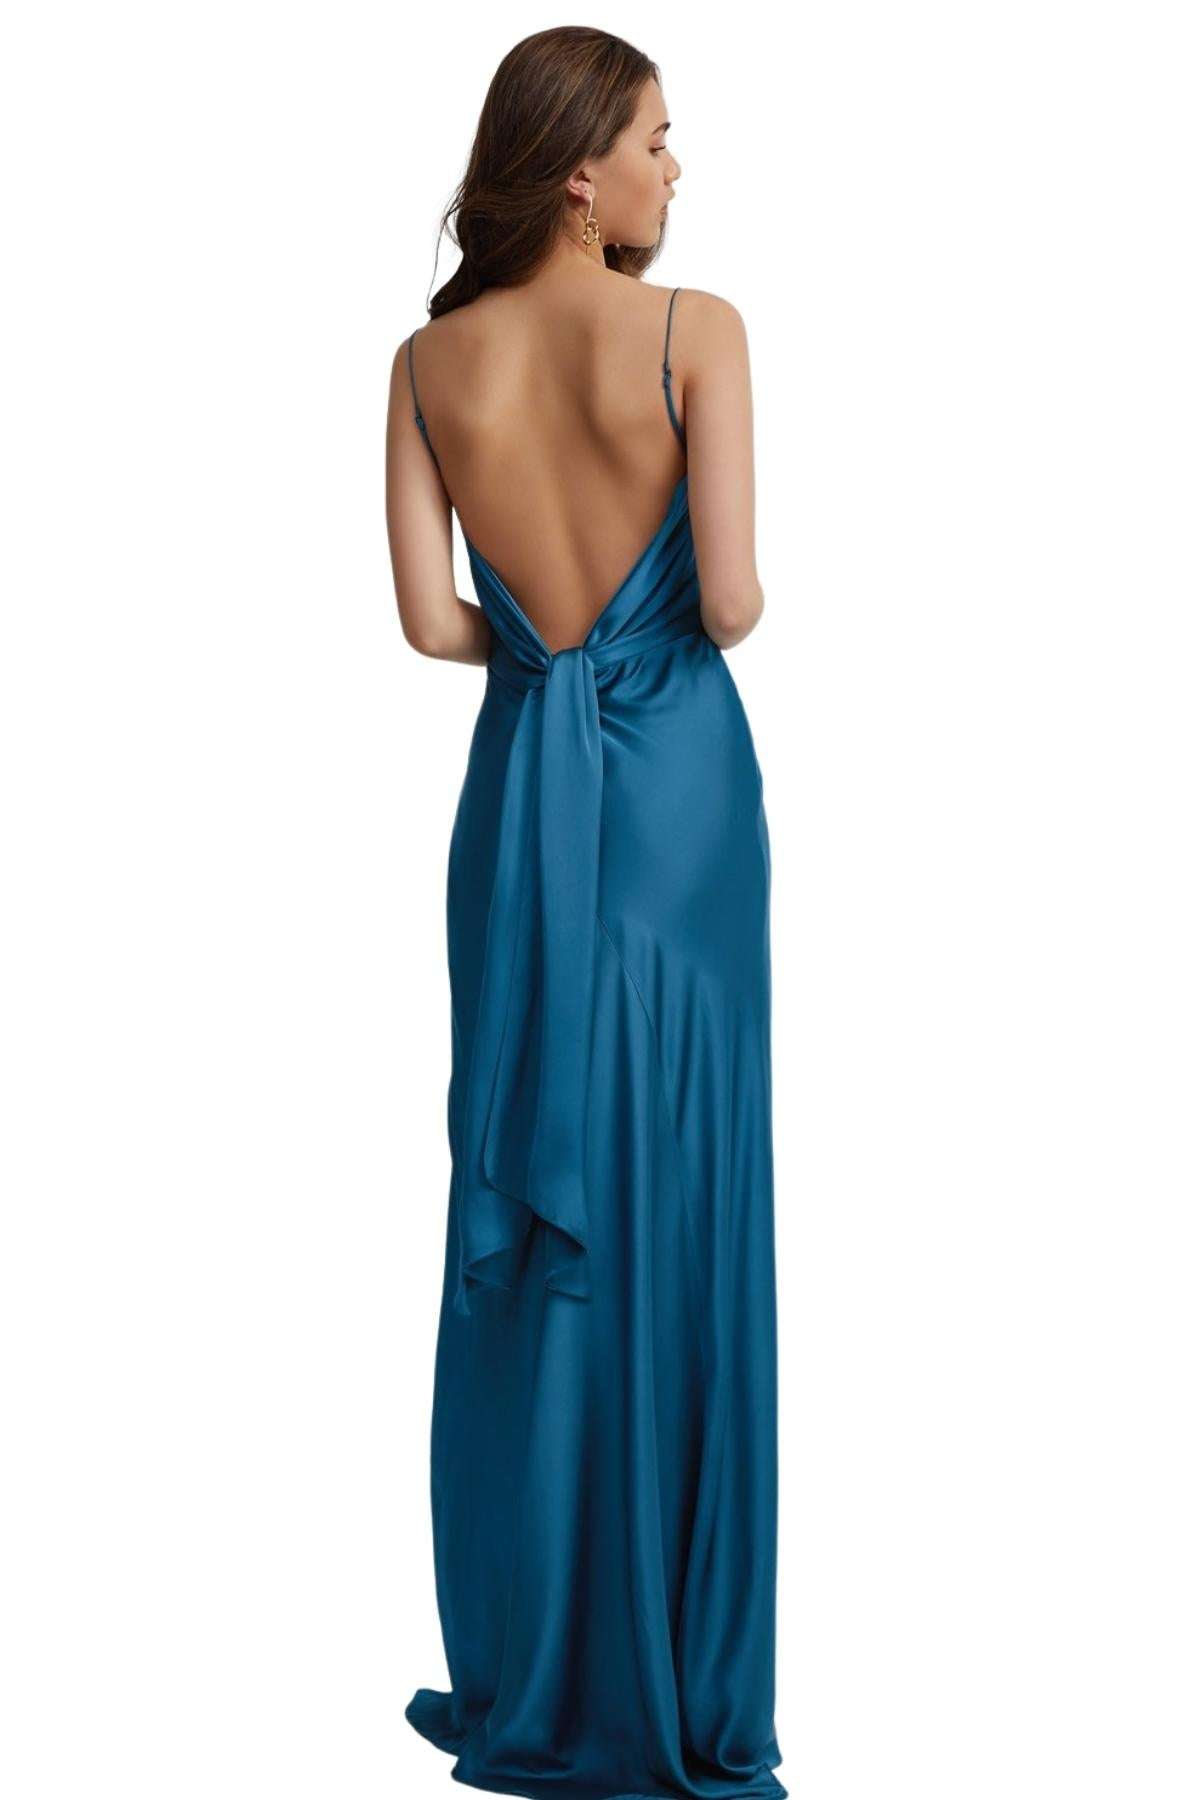 Lexi BUY IT LEXI Romy Dress (Teal Blue) - lexi-romy-dress-teal-blue---rrp-9-dress-for-a-night-30754850_3dc4ce25-7428-46e3-8725-4b1ec2dd465b.jpg